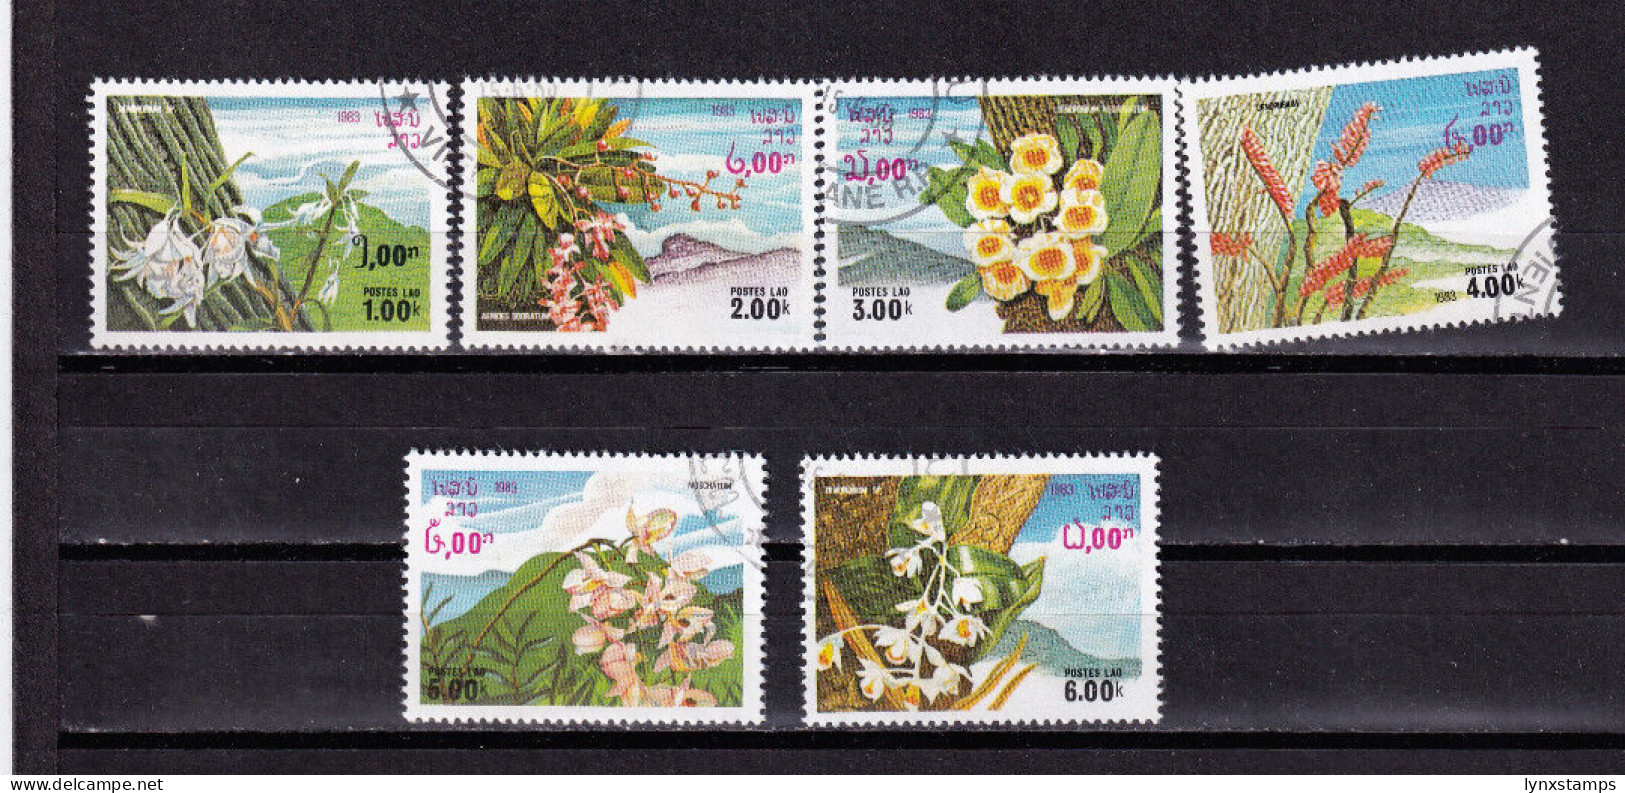 LI04 Laos 1983 Flowers Used Stamps - Laos